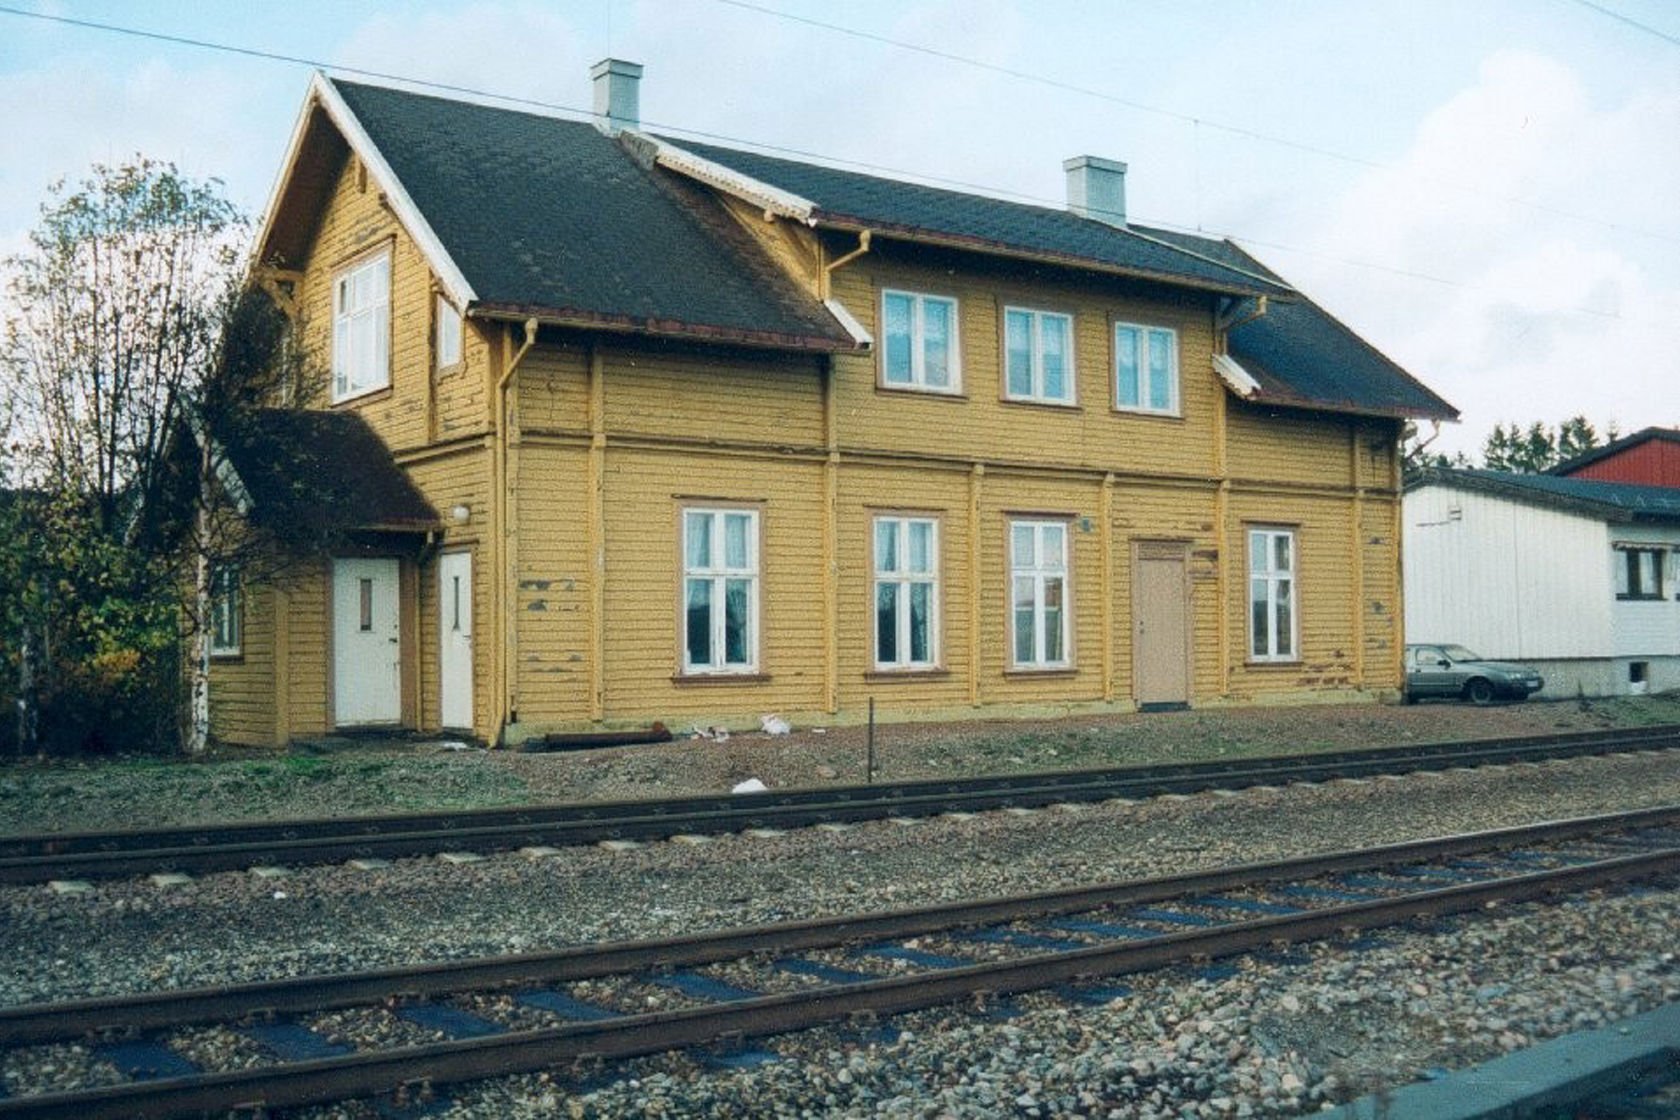 Tracks and station building at Sem station